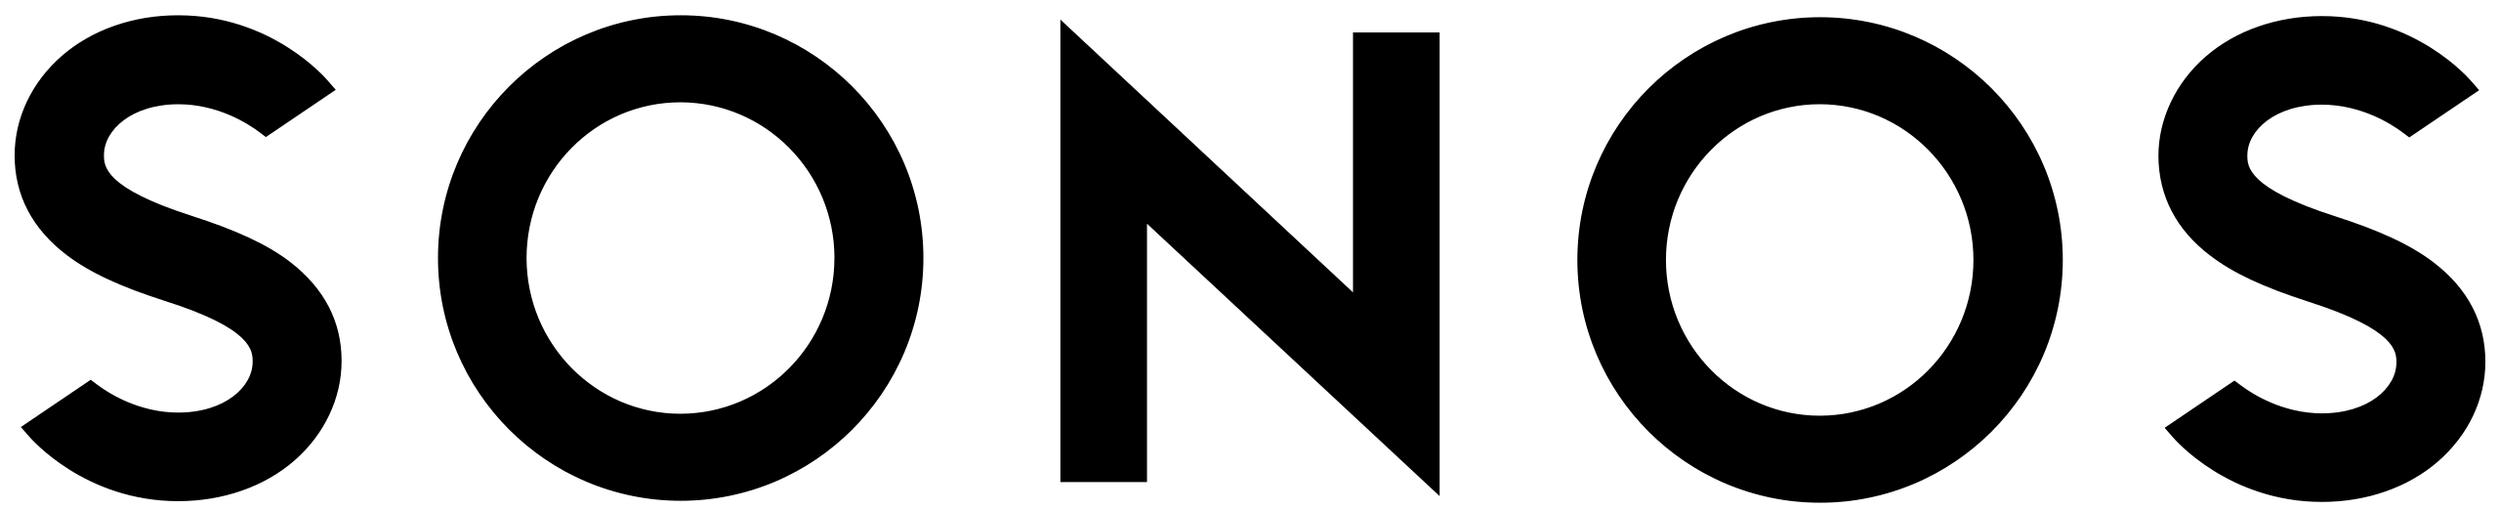 2560px-Sonos_(Unternehmen)_logo.svg.png